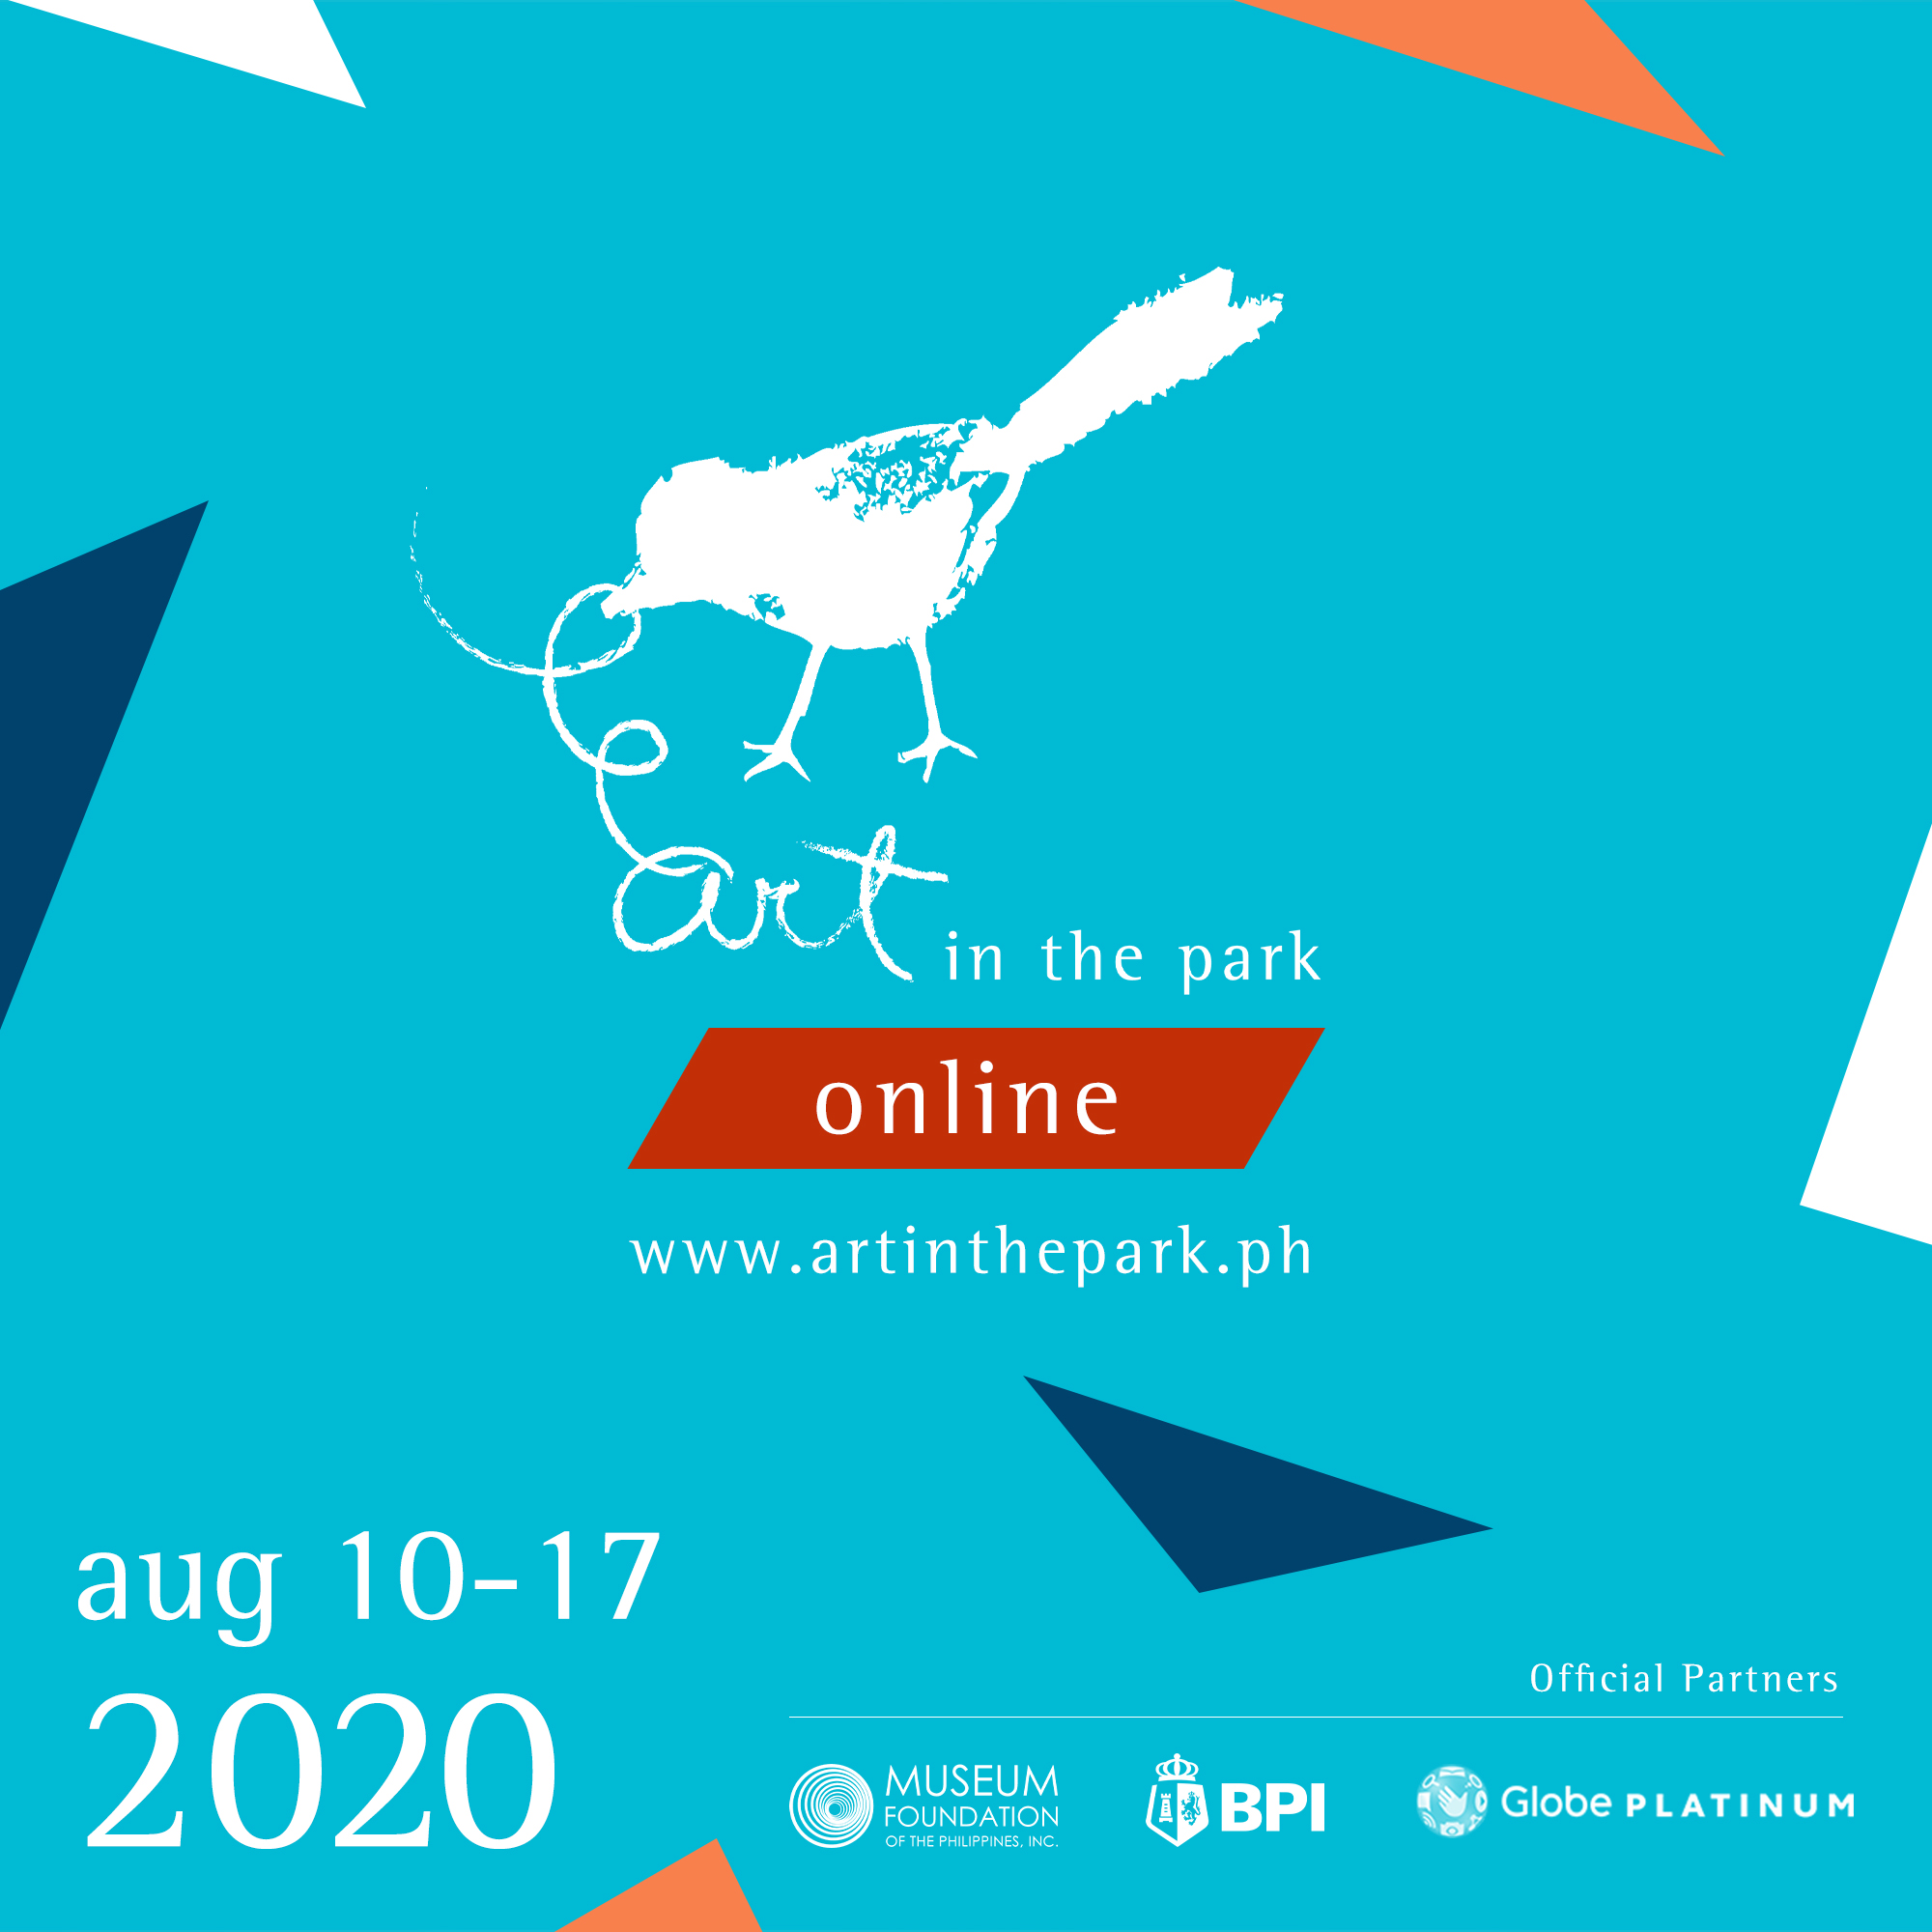 Art in the Park online 2020 e poster